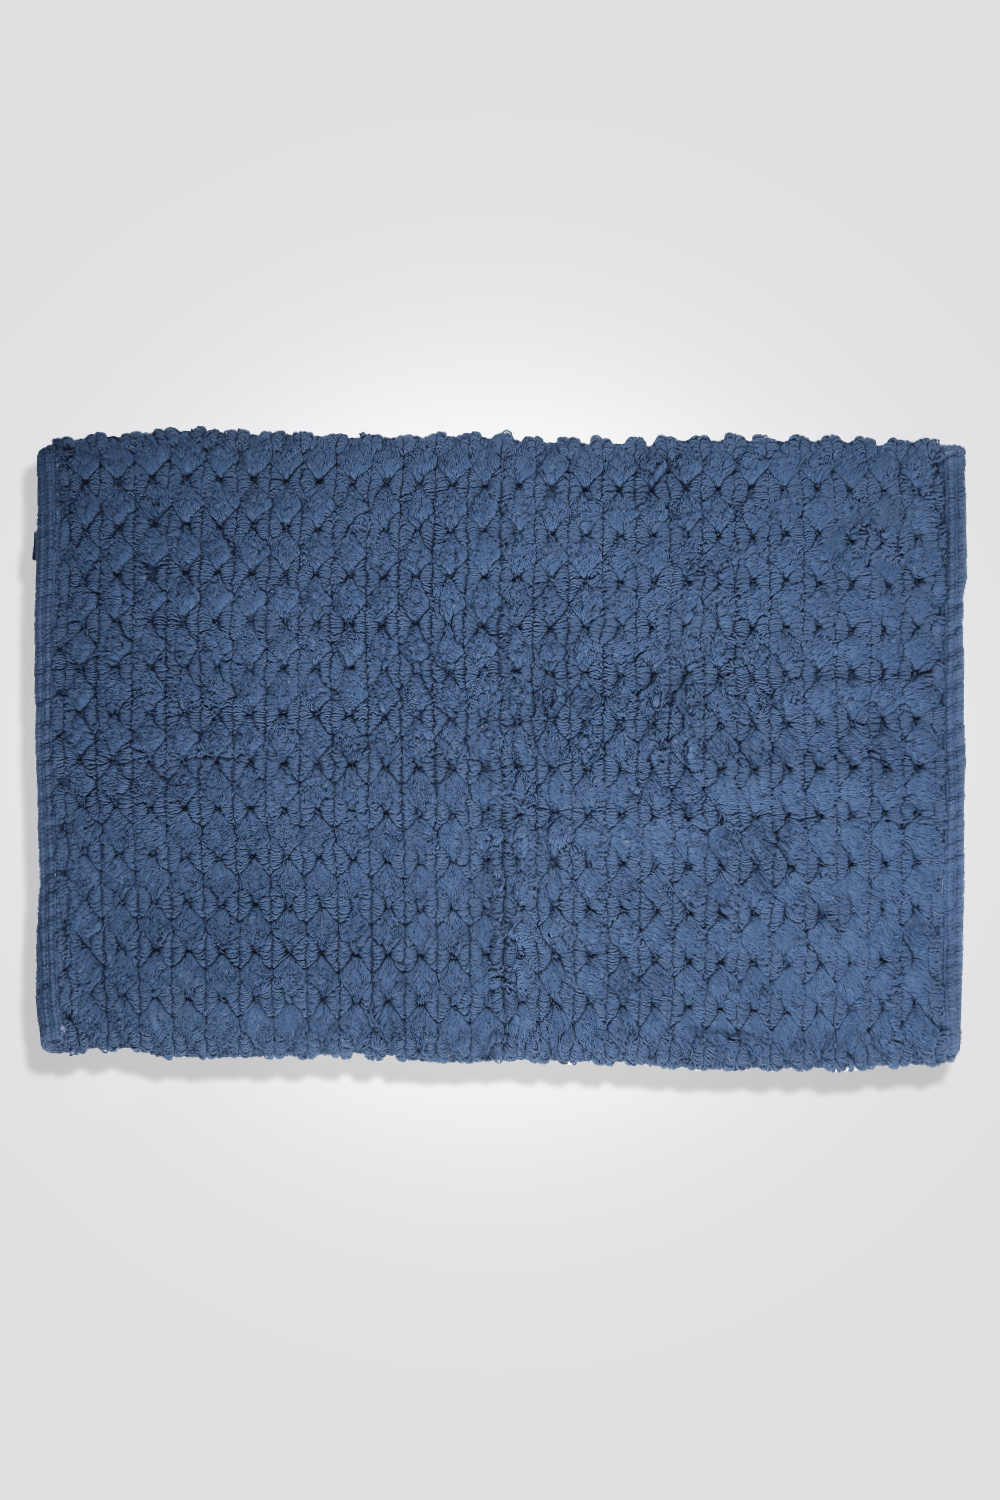 KENNETH COLE - שטיח אמבט ארוג כותנה 50/80 בצבע כחול - MASHBIR//365